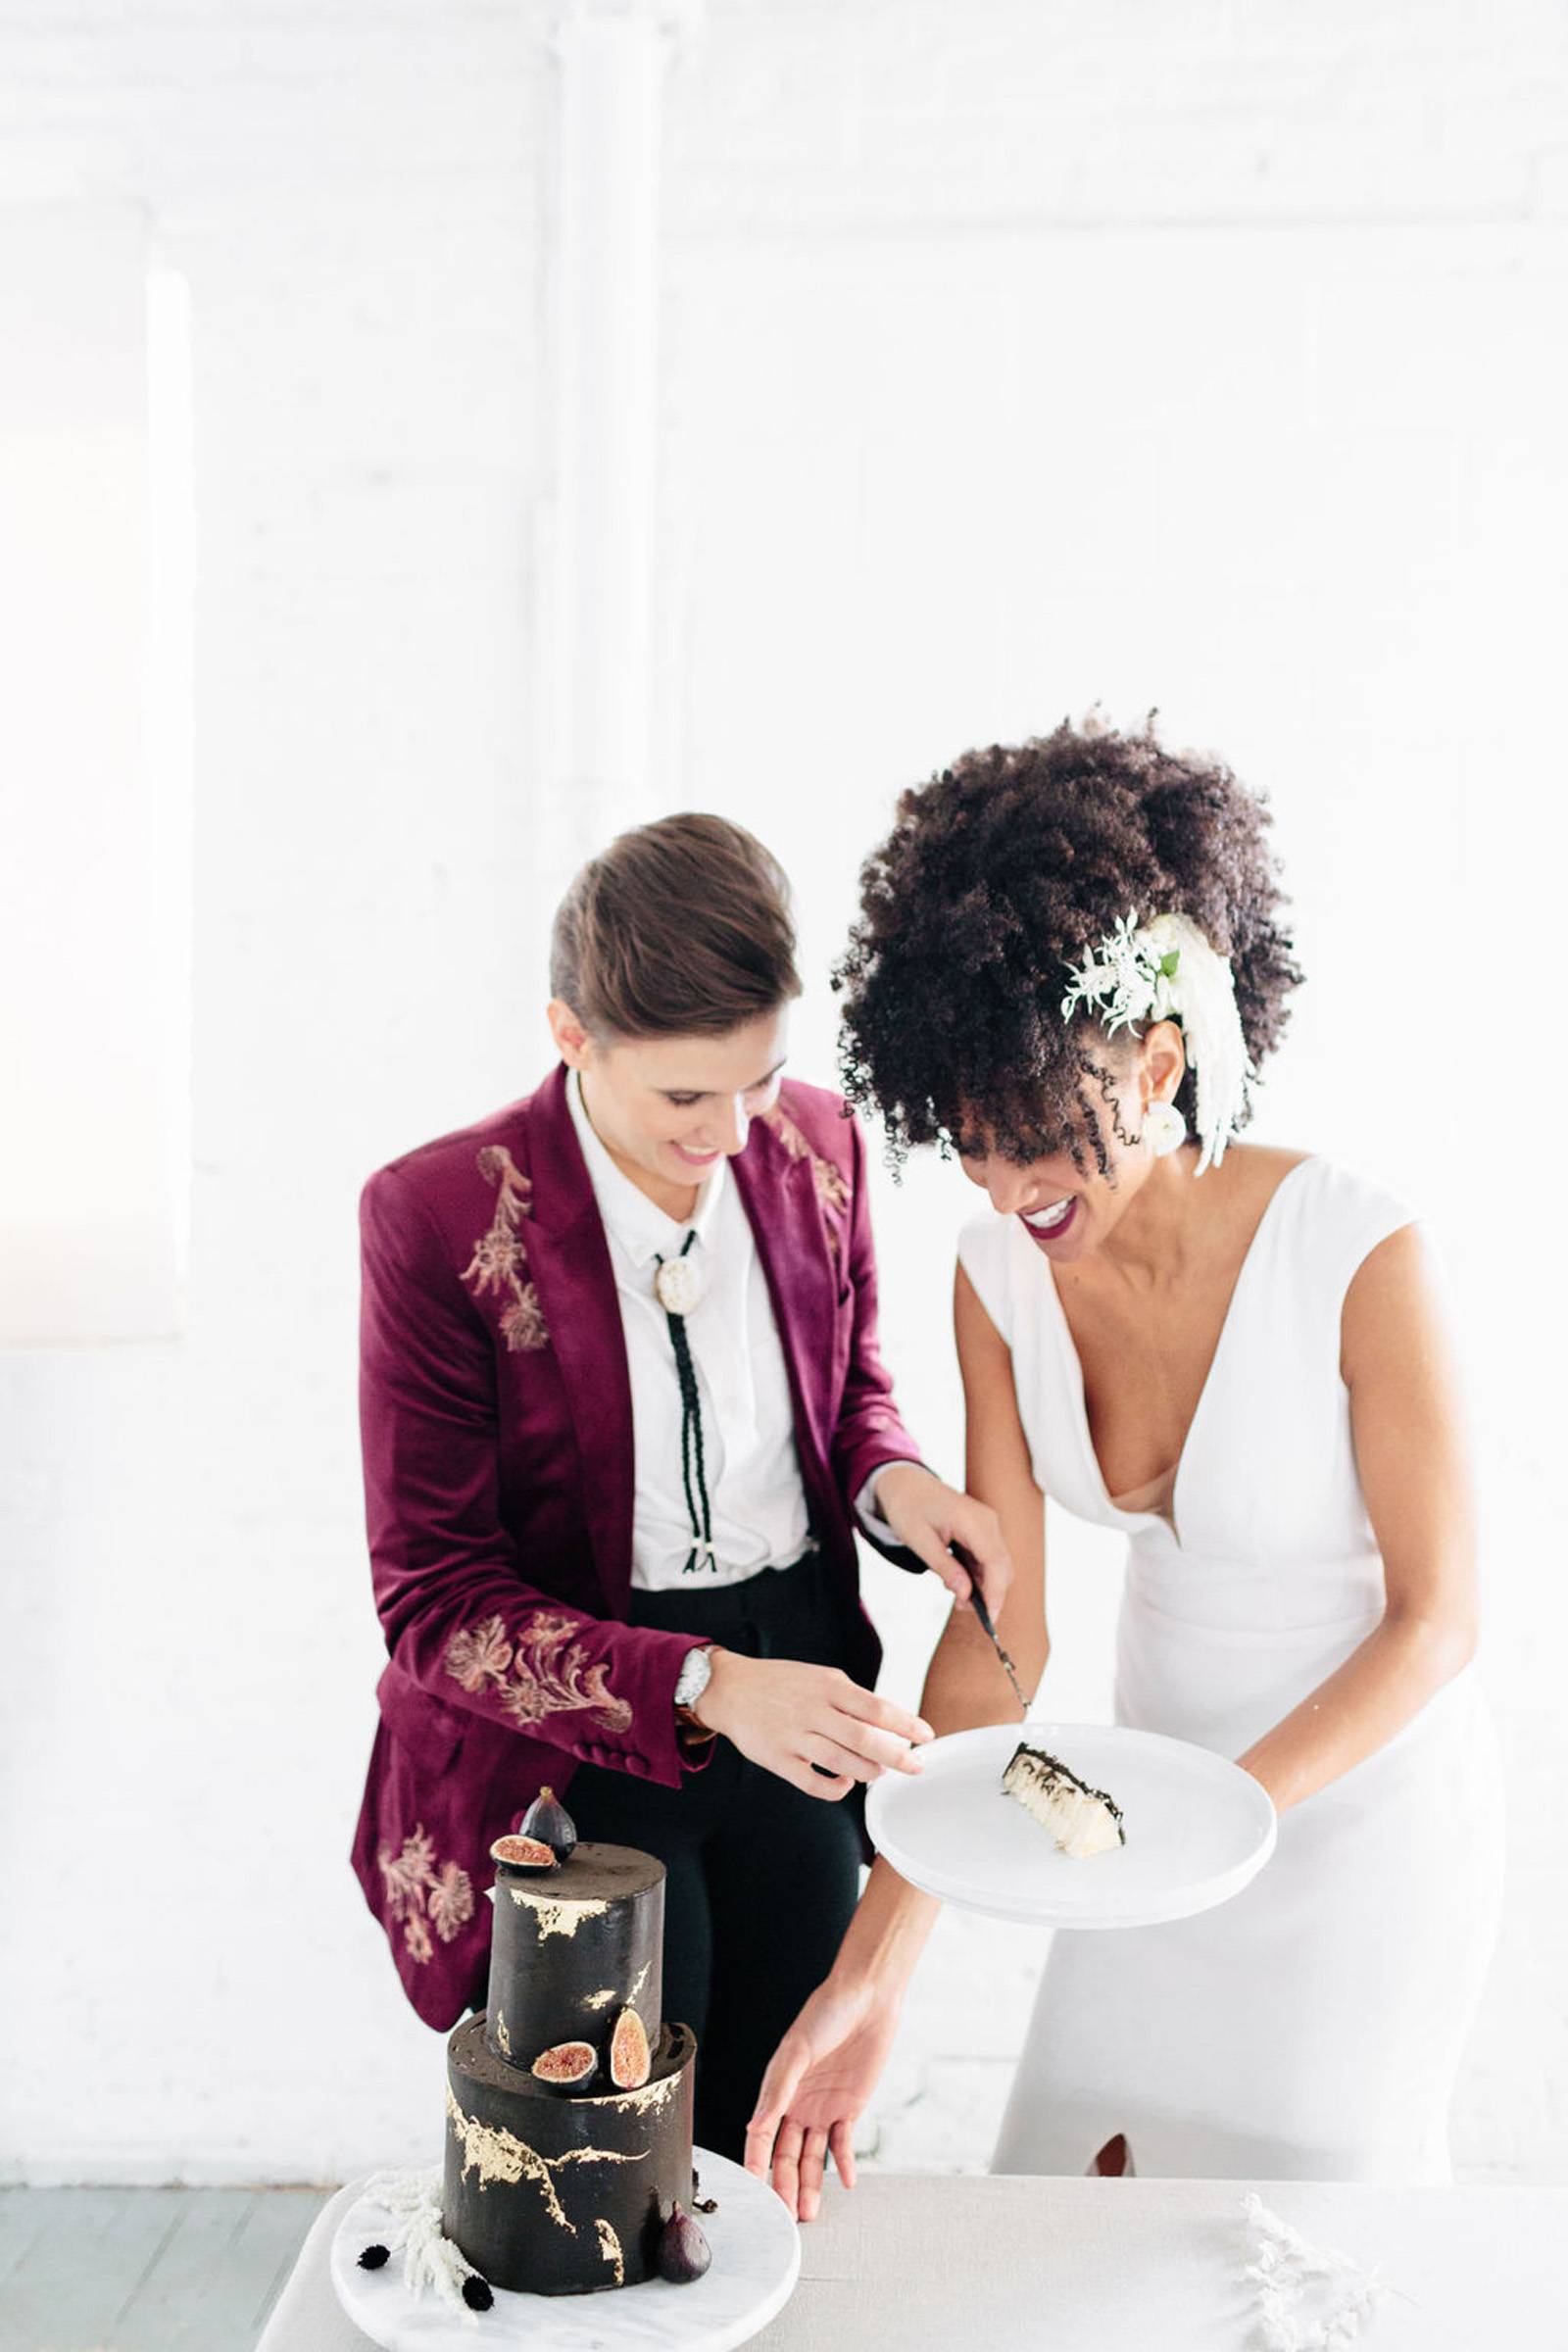 Couple enjoying modern, moody dark wedding cake with gold details